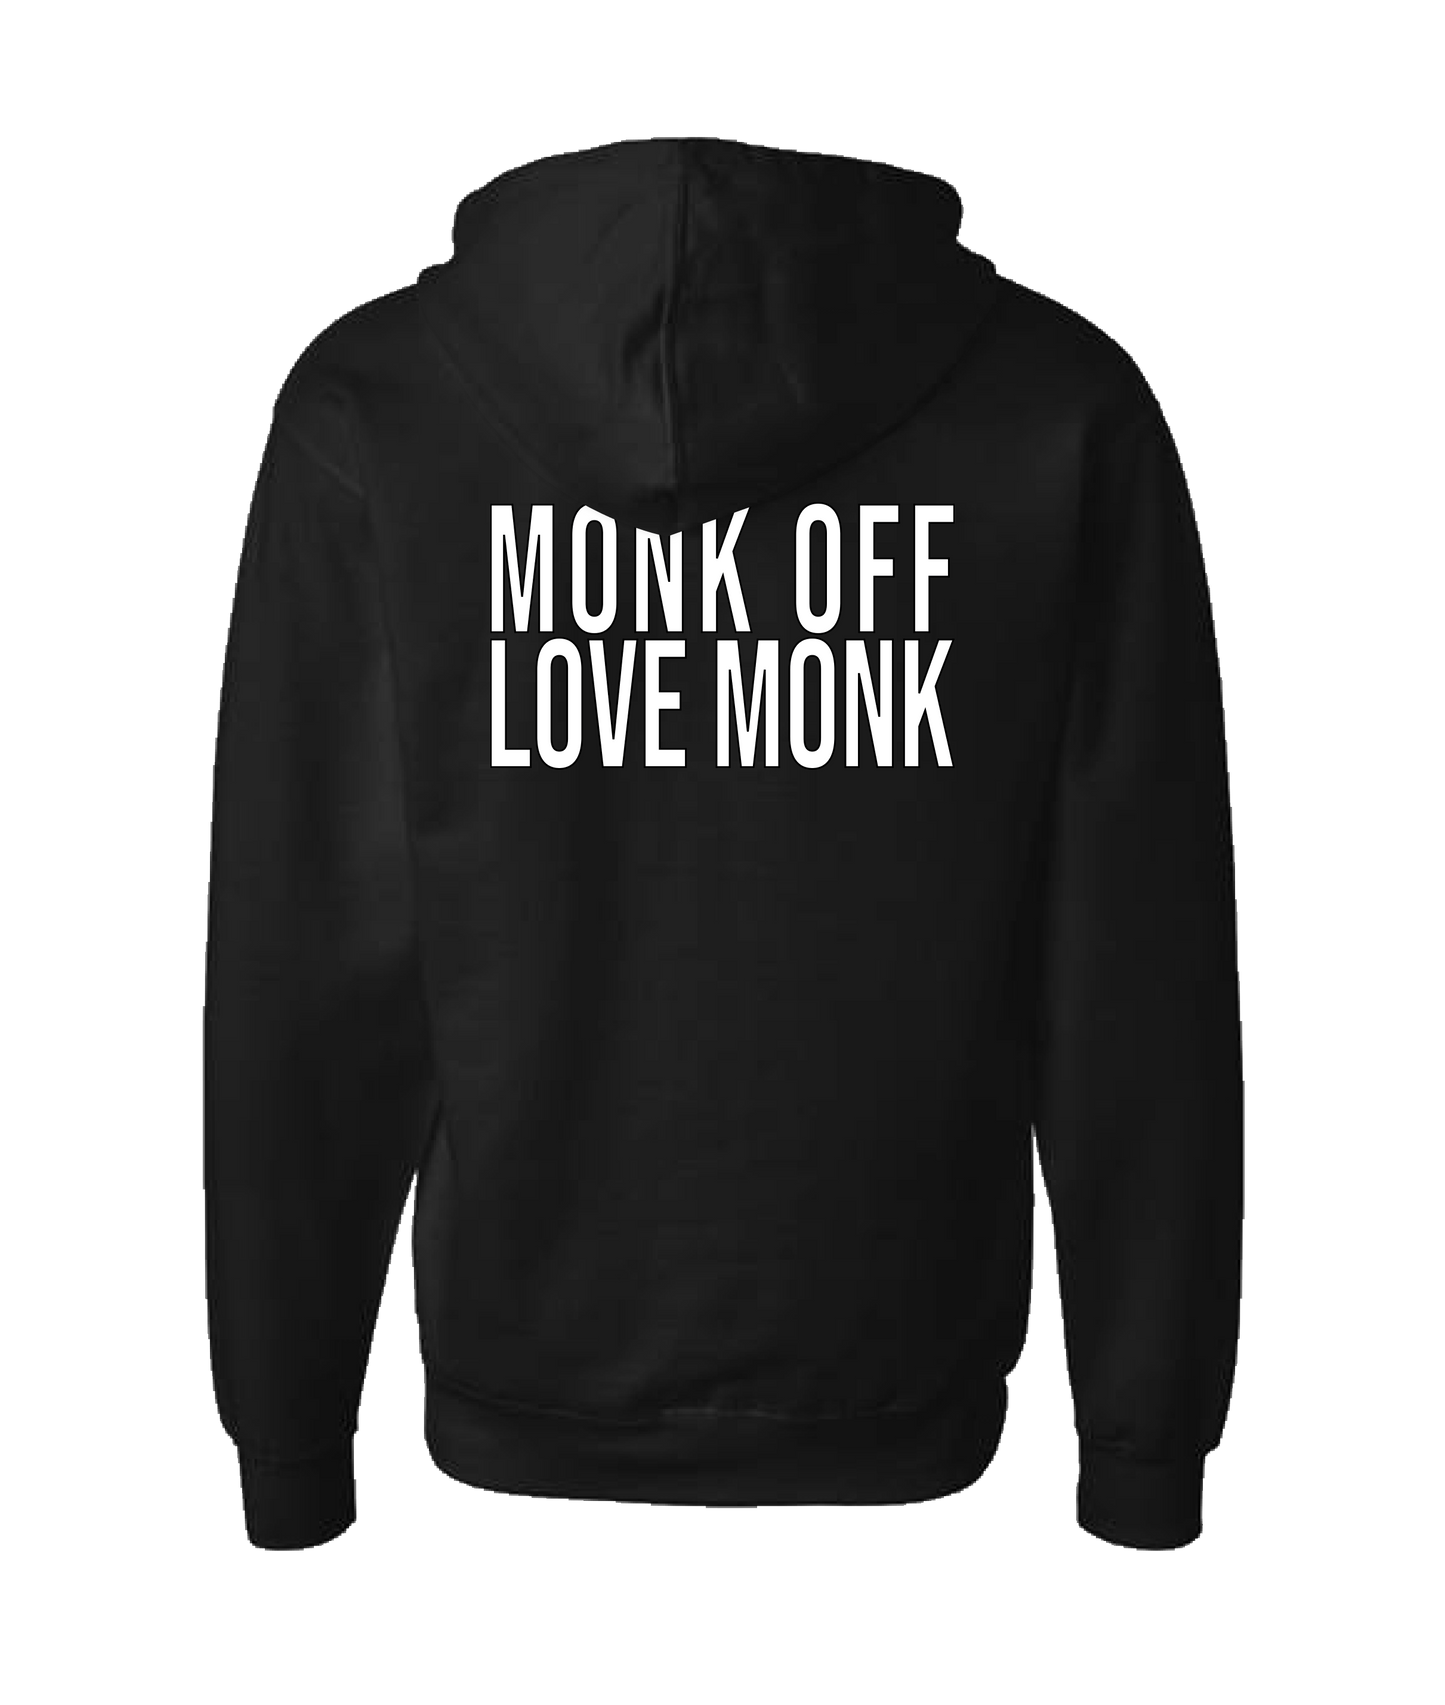 Monk Melville - Monk Off Love Monk - Black Zip Up Hoodie